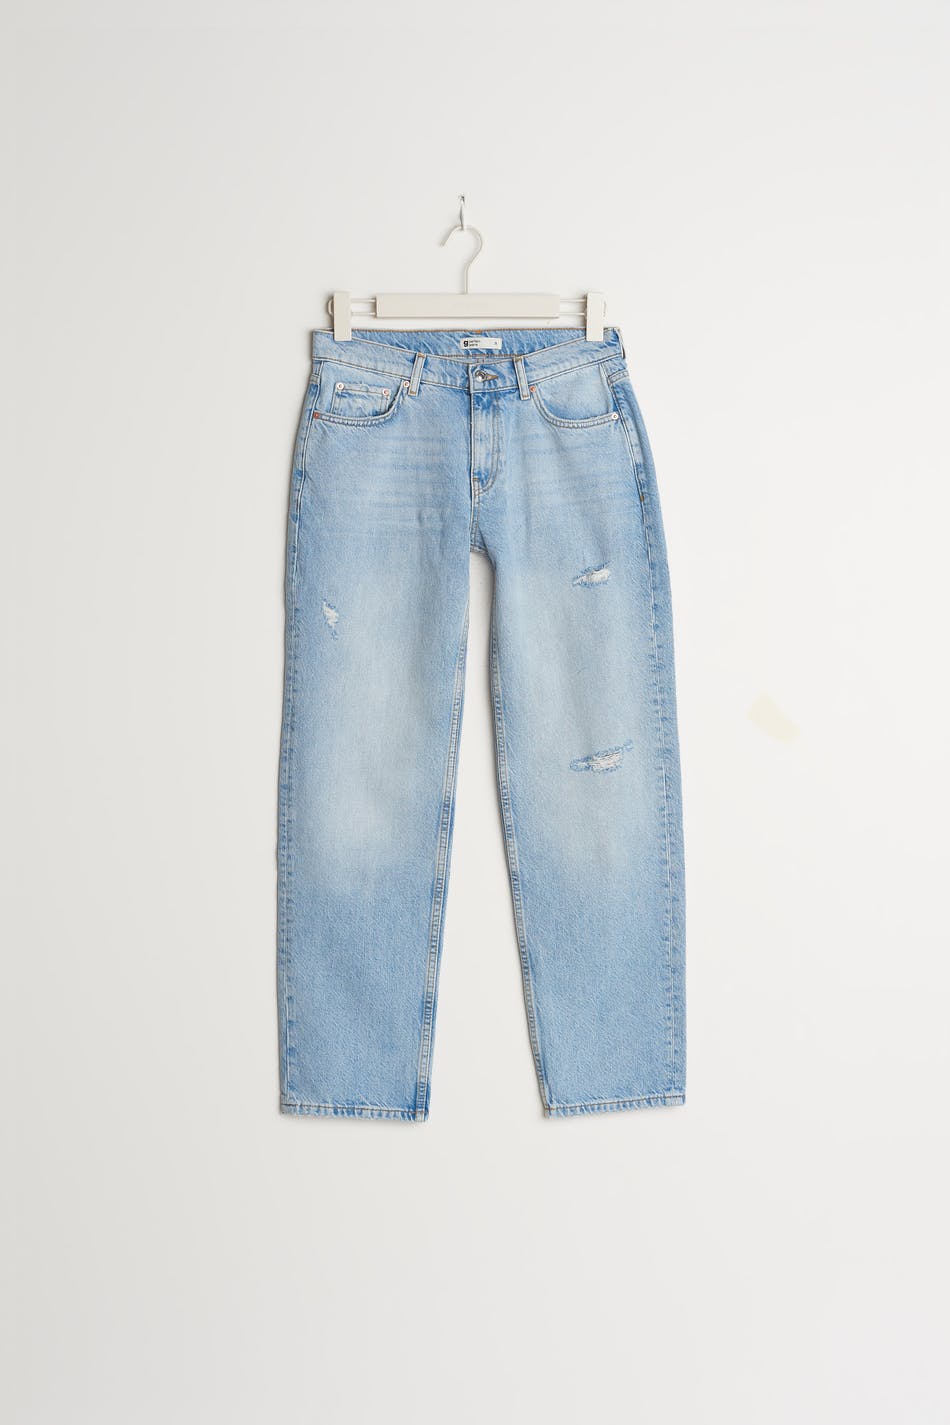 Gina Tricot 90s petite low waist jeans 42  Lt blue